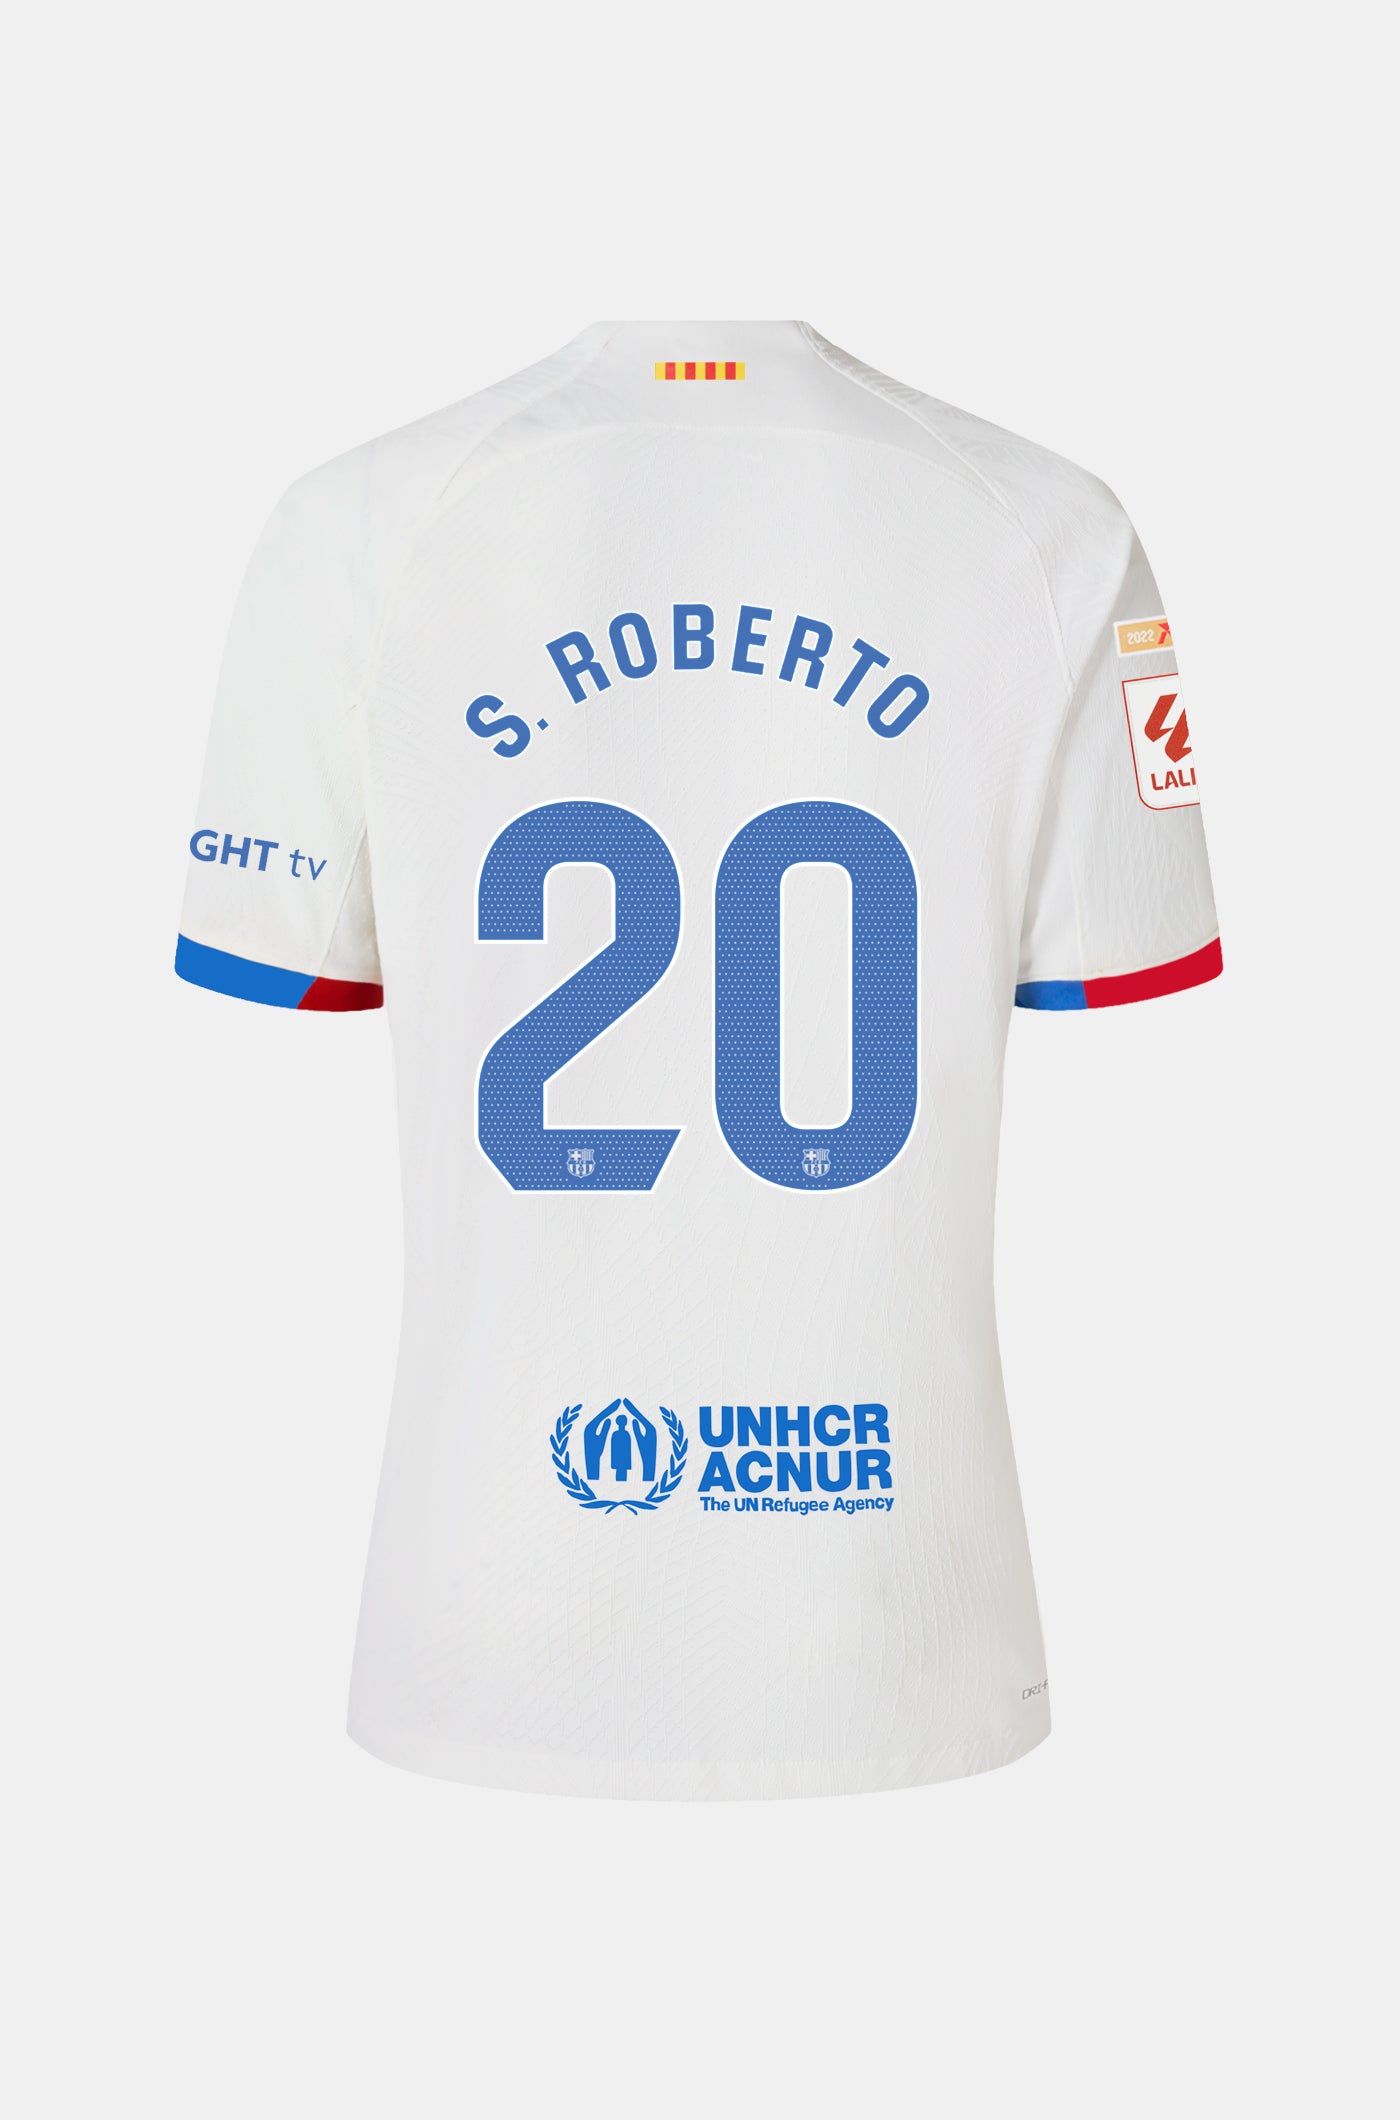 LFP FC Barcelona Away Shirt 23/24 Player’s Edition - Women - S. ROBERTO